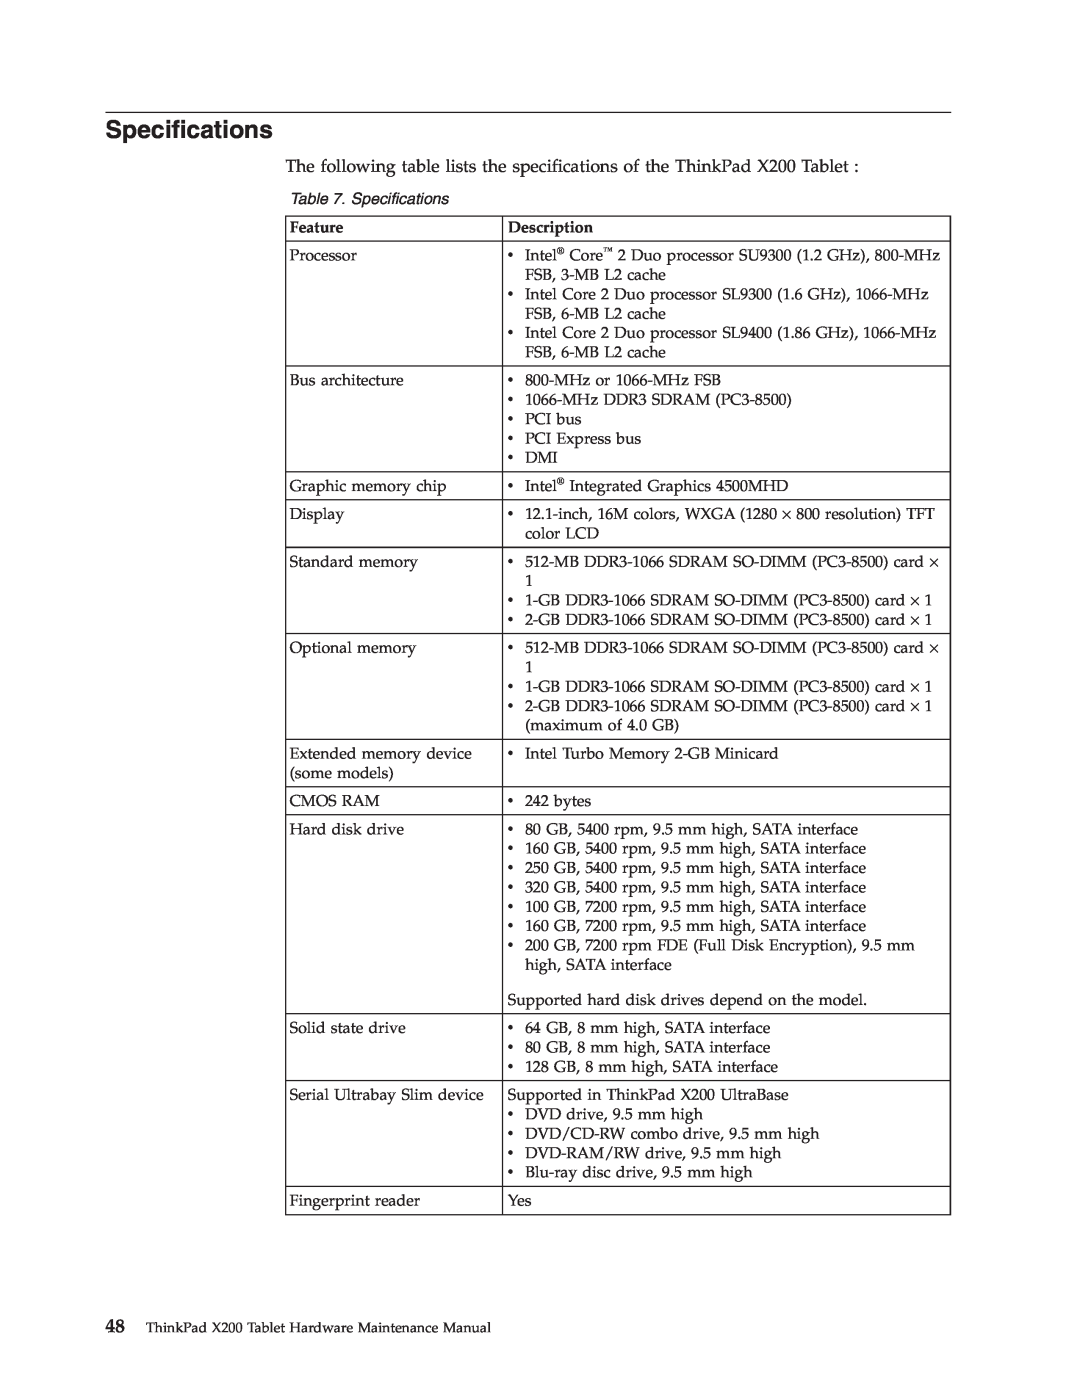 Lenovo X200 manual Specifications, Feature, Description 